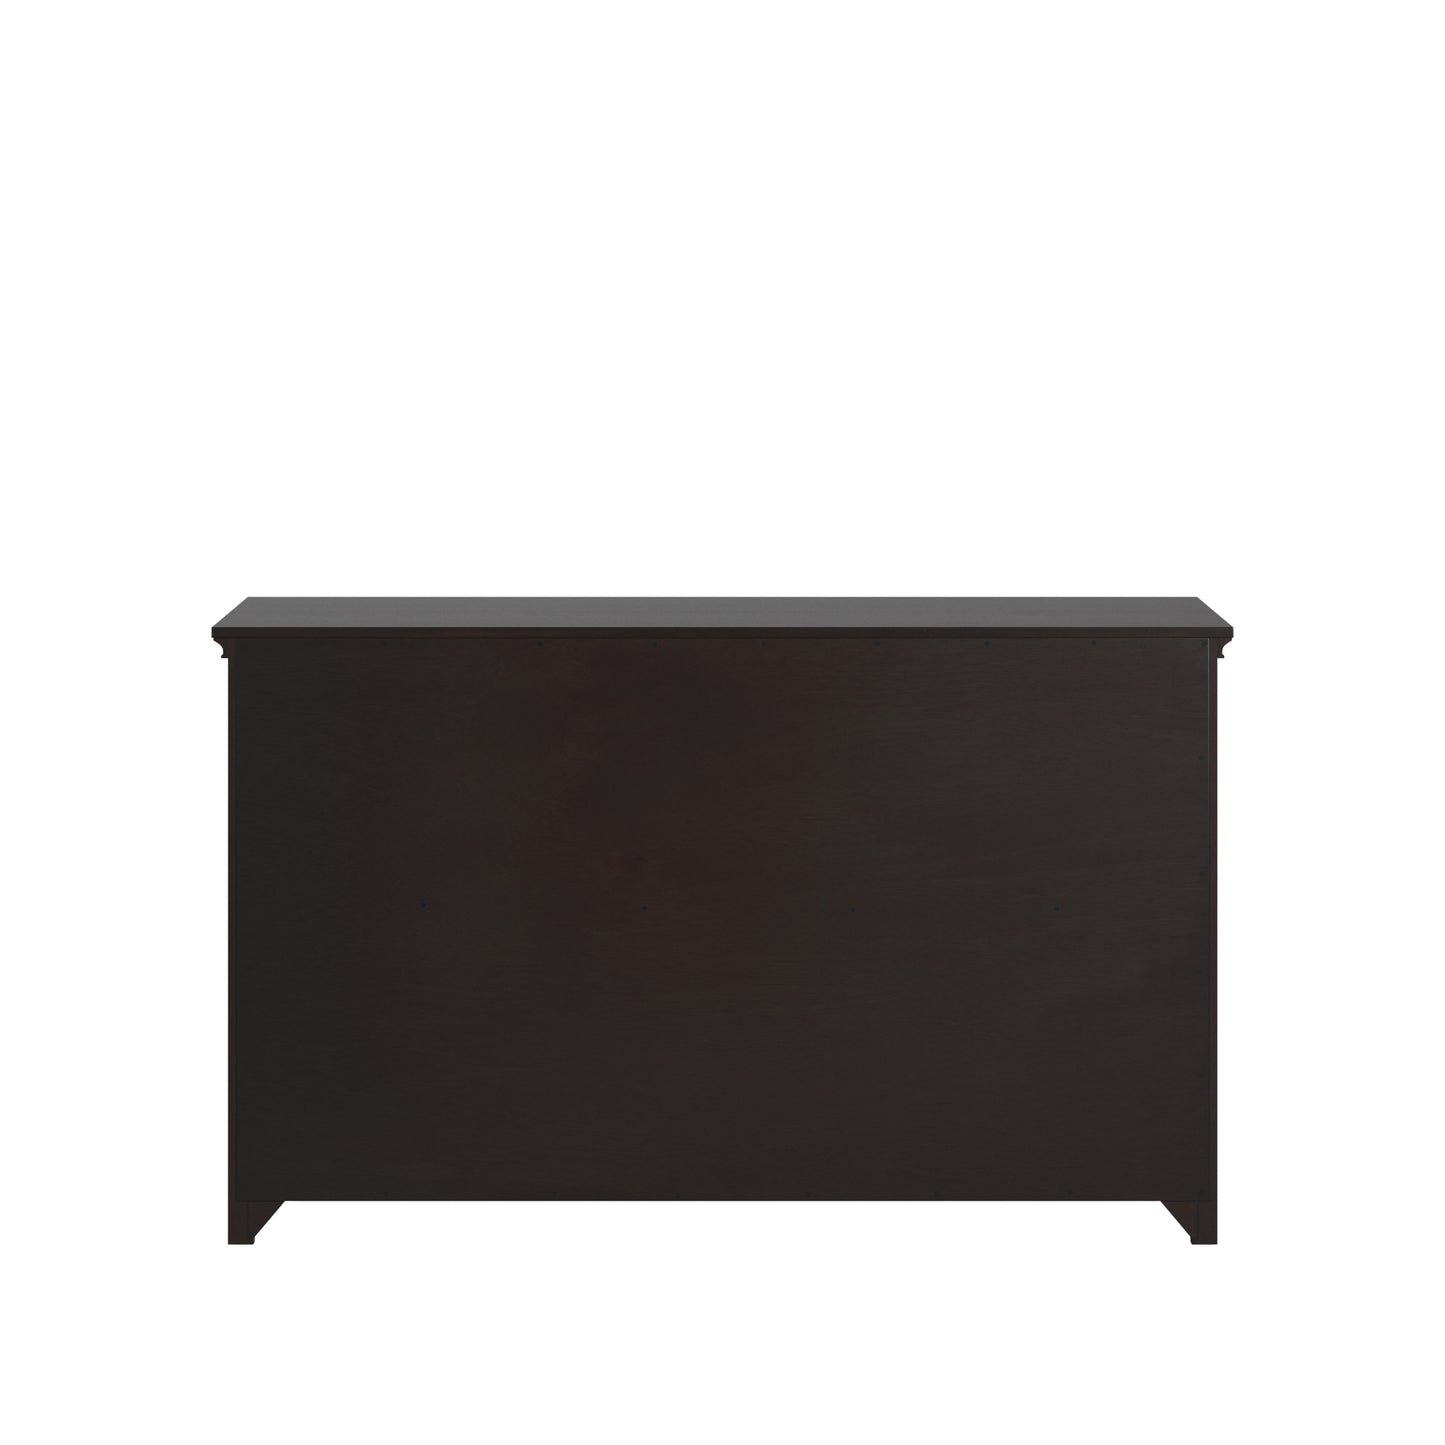 9-Drawer Wood Modular Storage Dresser - Antique Black Finish, Dresser Only